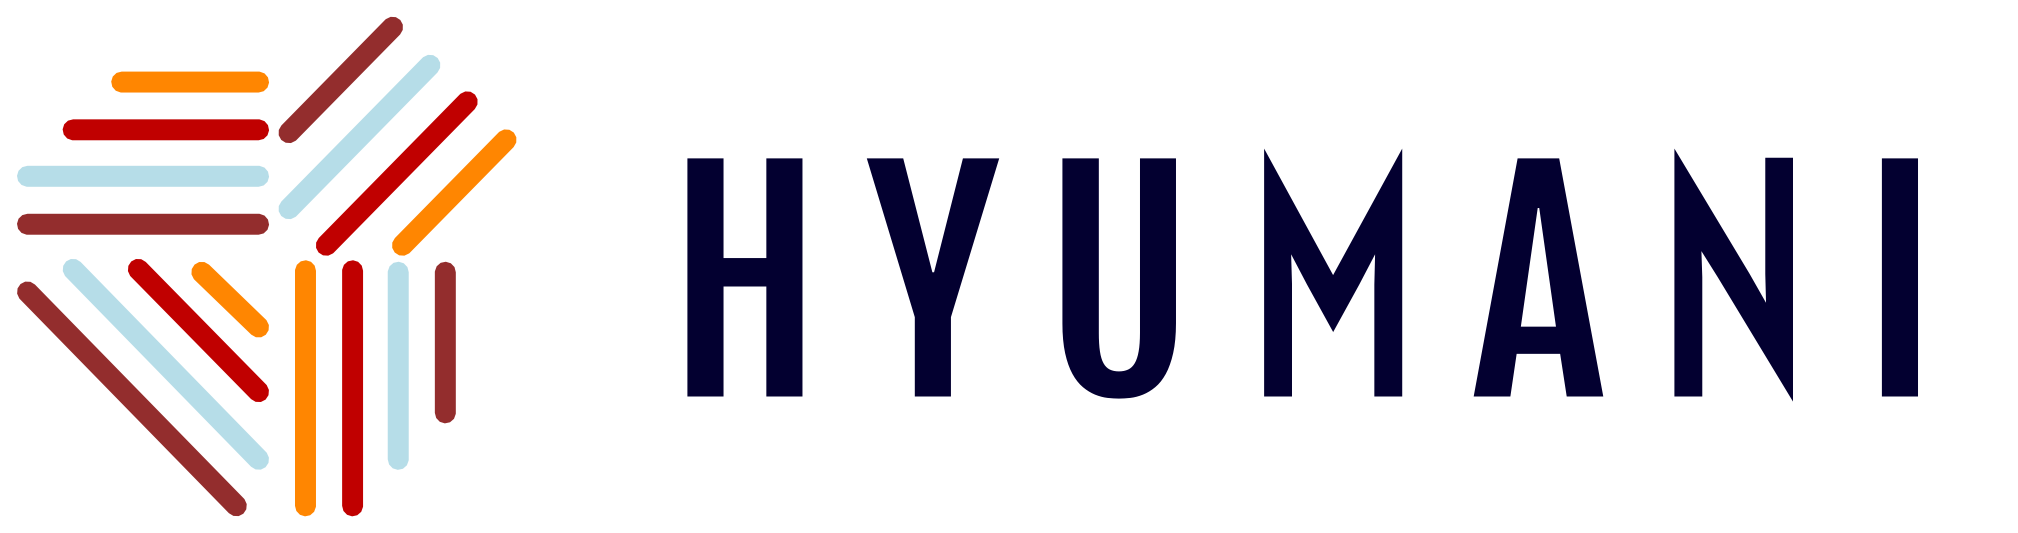 hyumani.com - solution for self growth by intrinsic motivators and intrinsic rewards